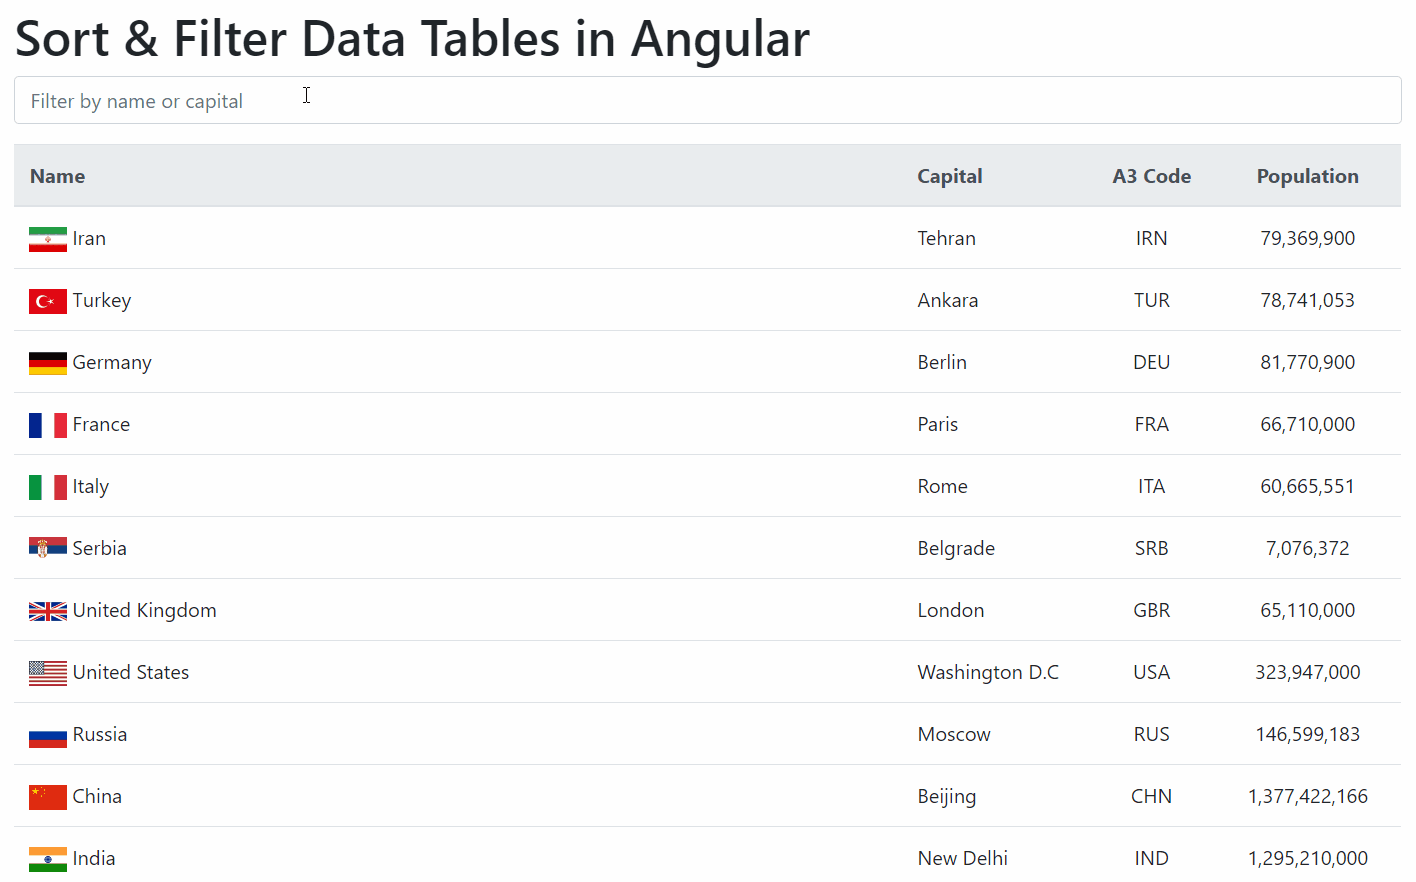 Sort & filter data tables in Angular